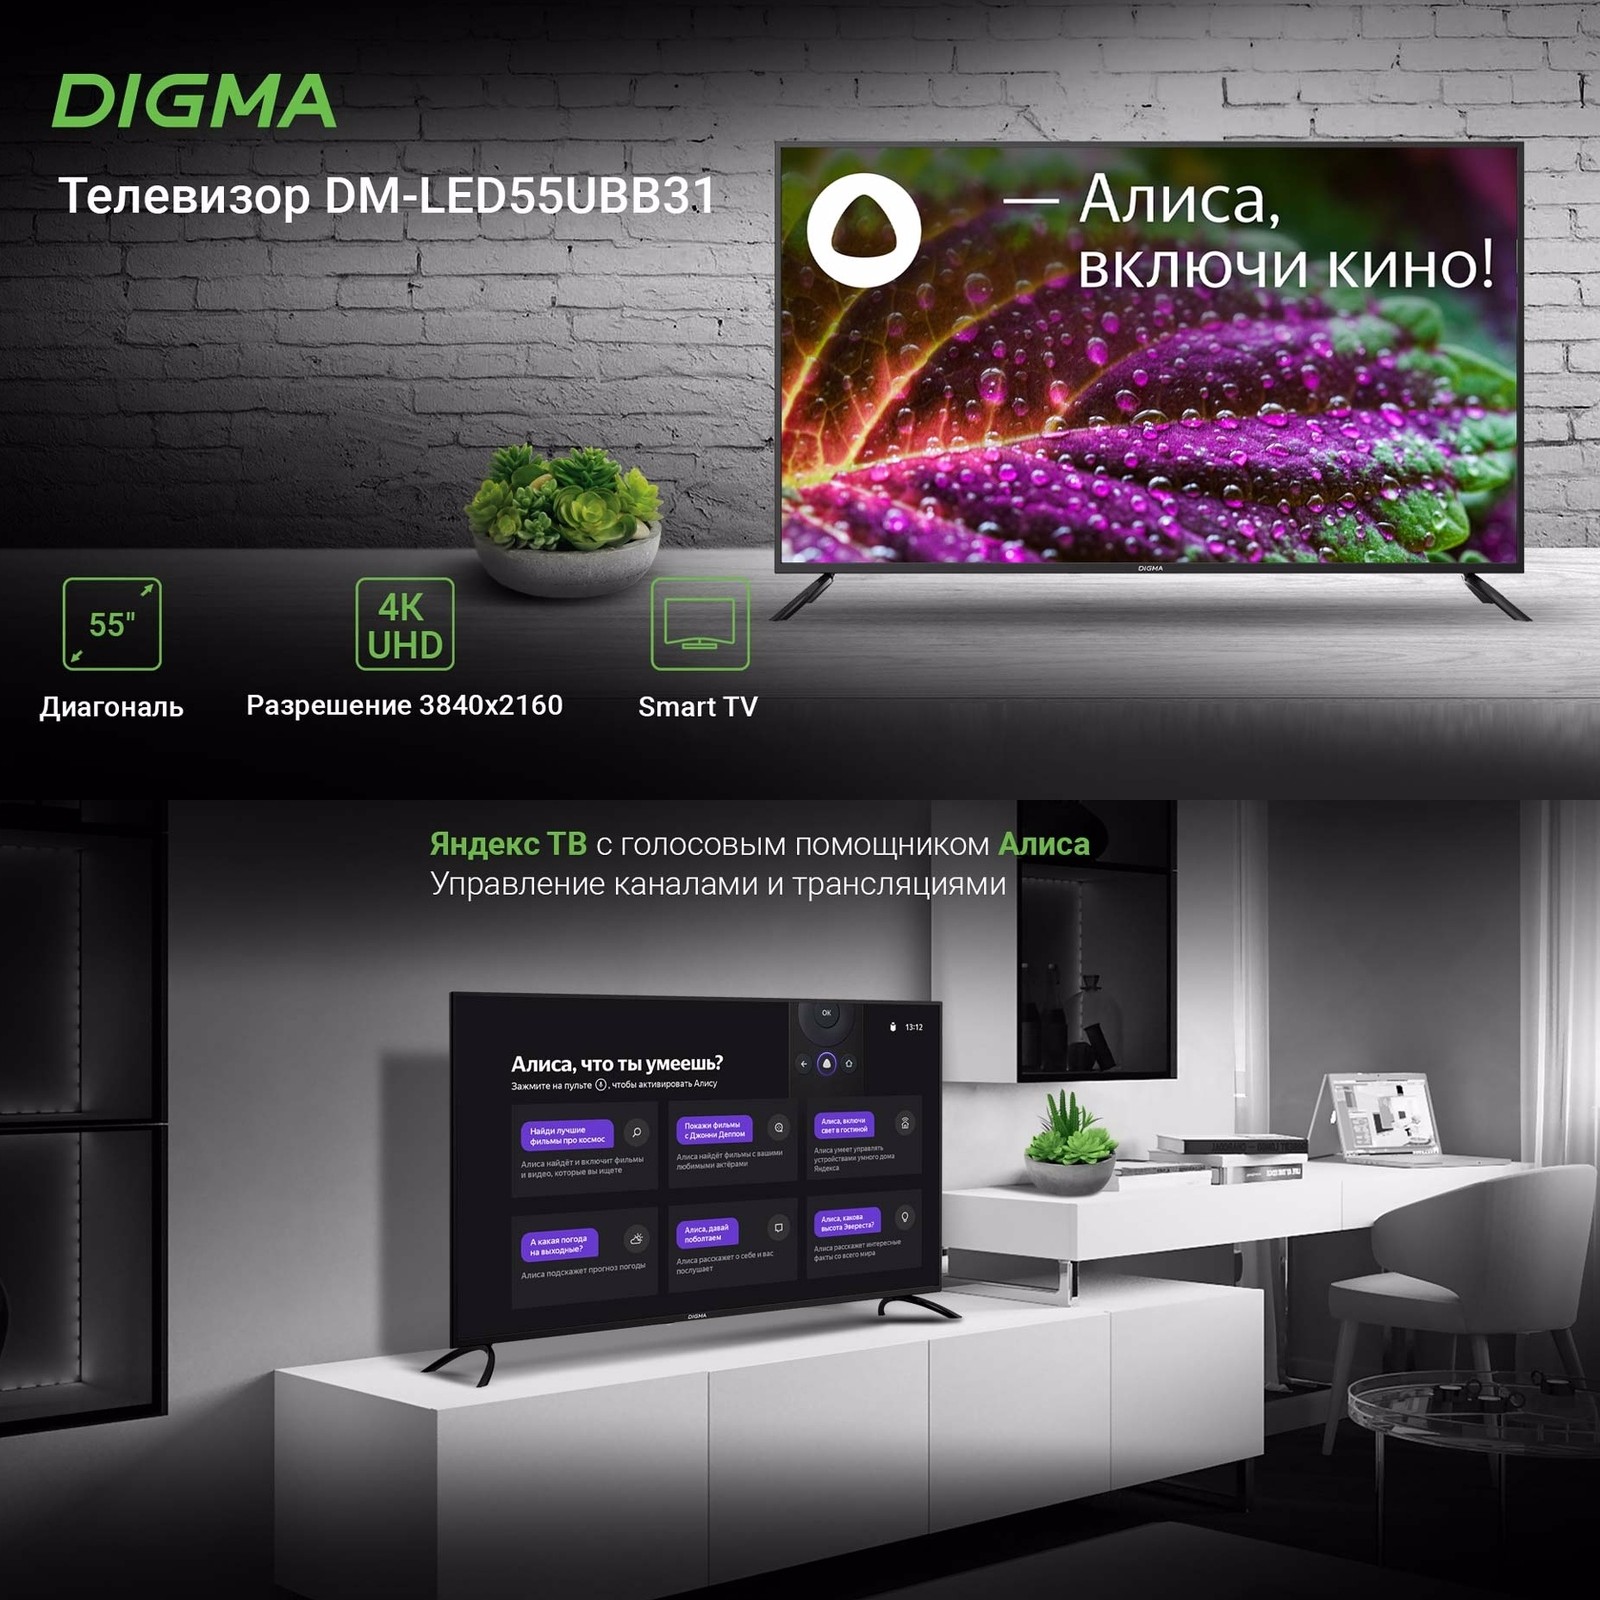 Телевизор Digma DM-LED55UBB31. Яндекс ТВ с голосовым помощником Алиса